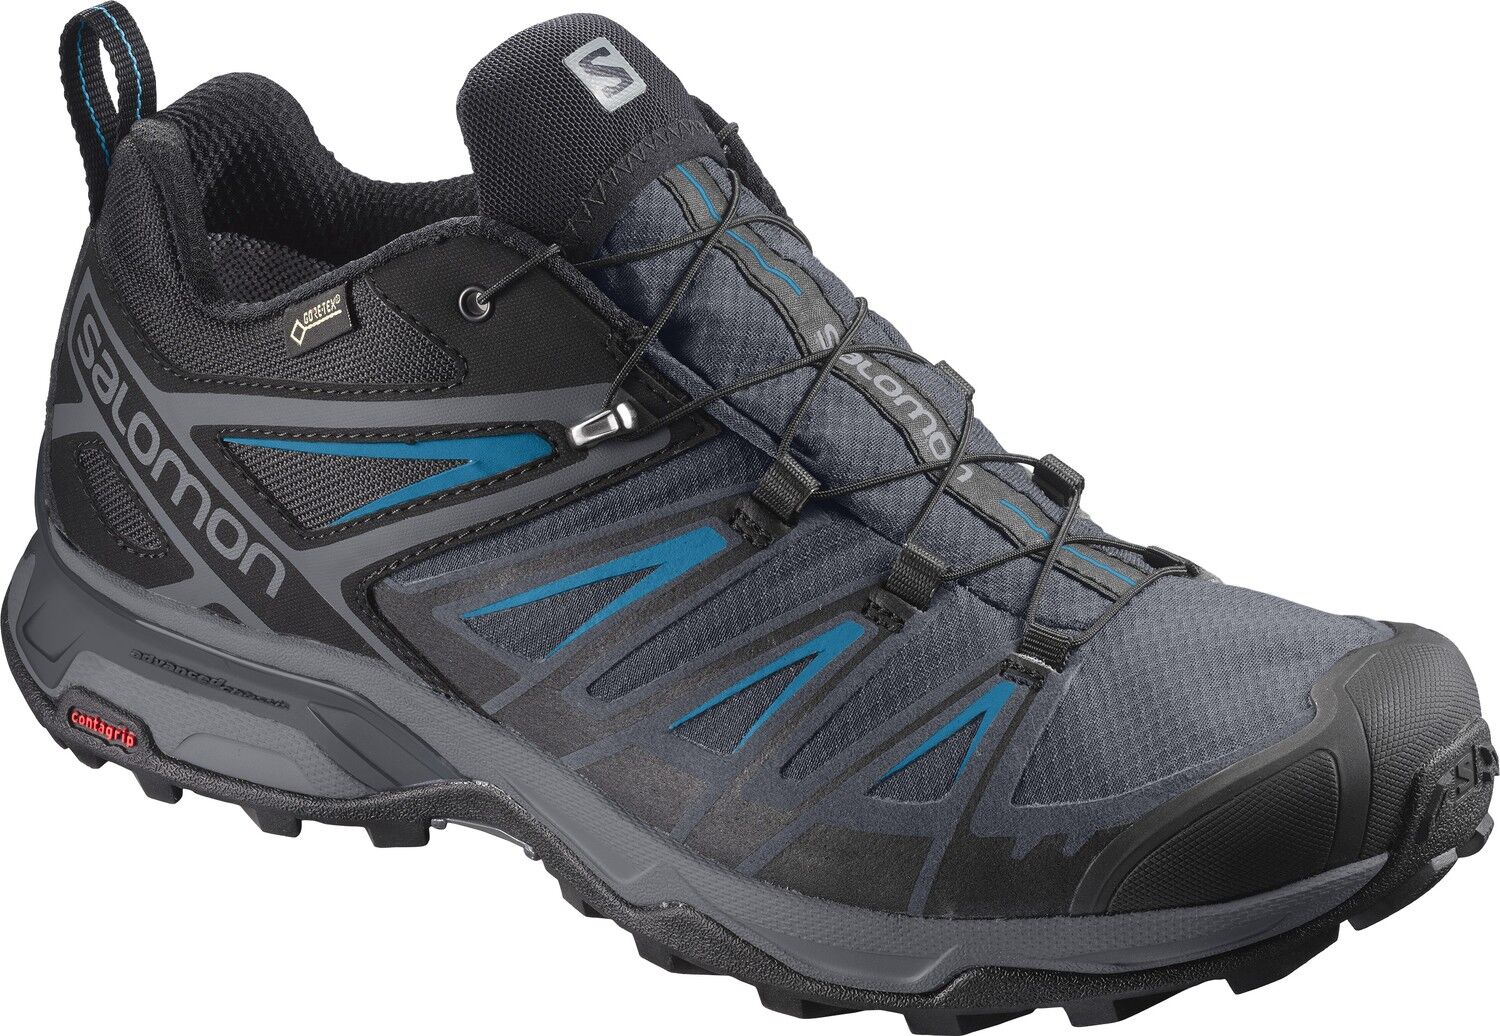 Salomon - X Ultra 3 GTX® - Walking Boots - Men's